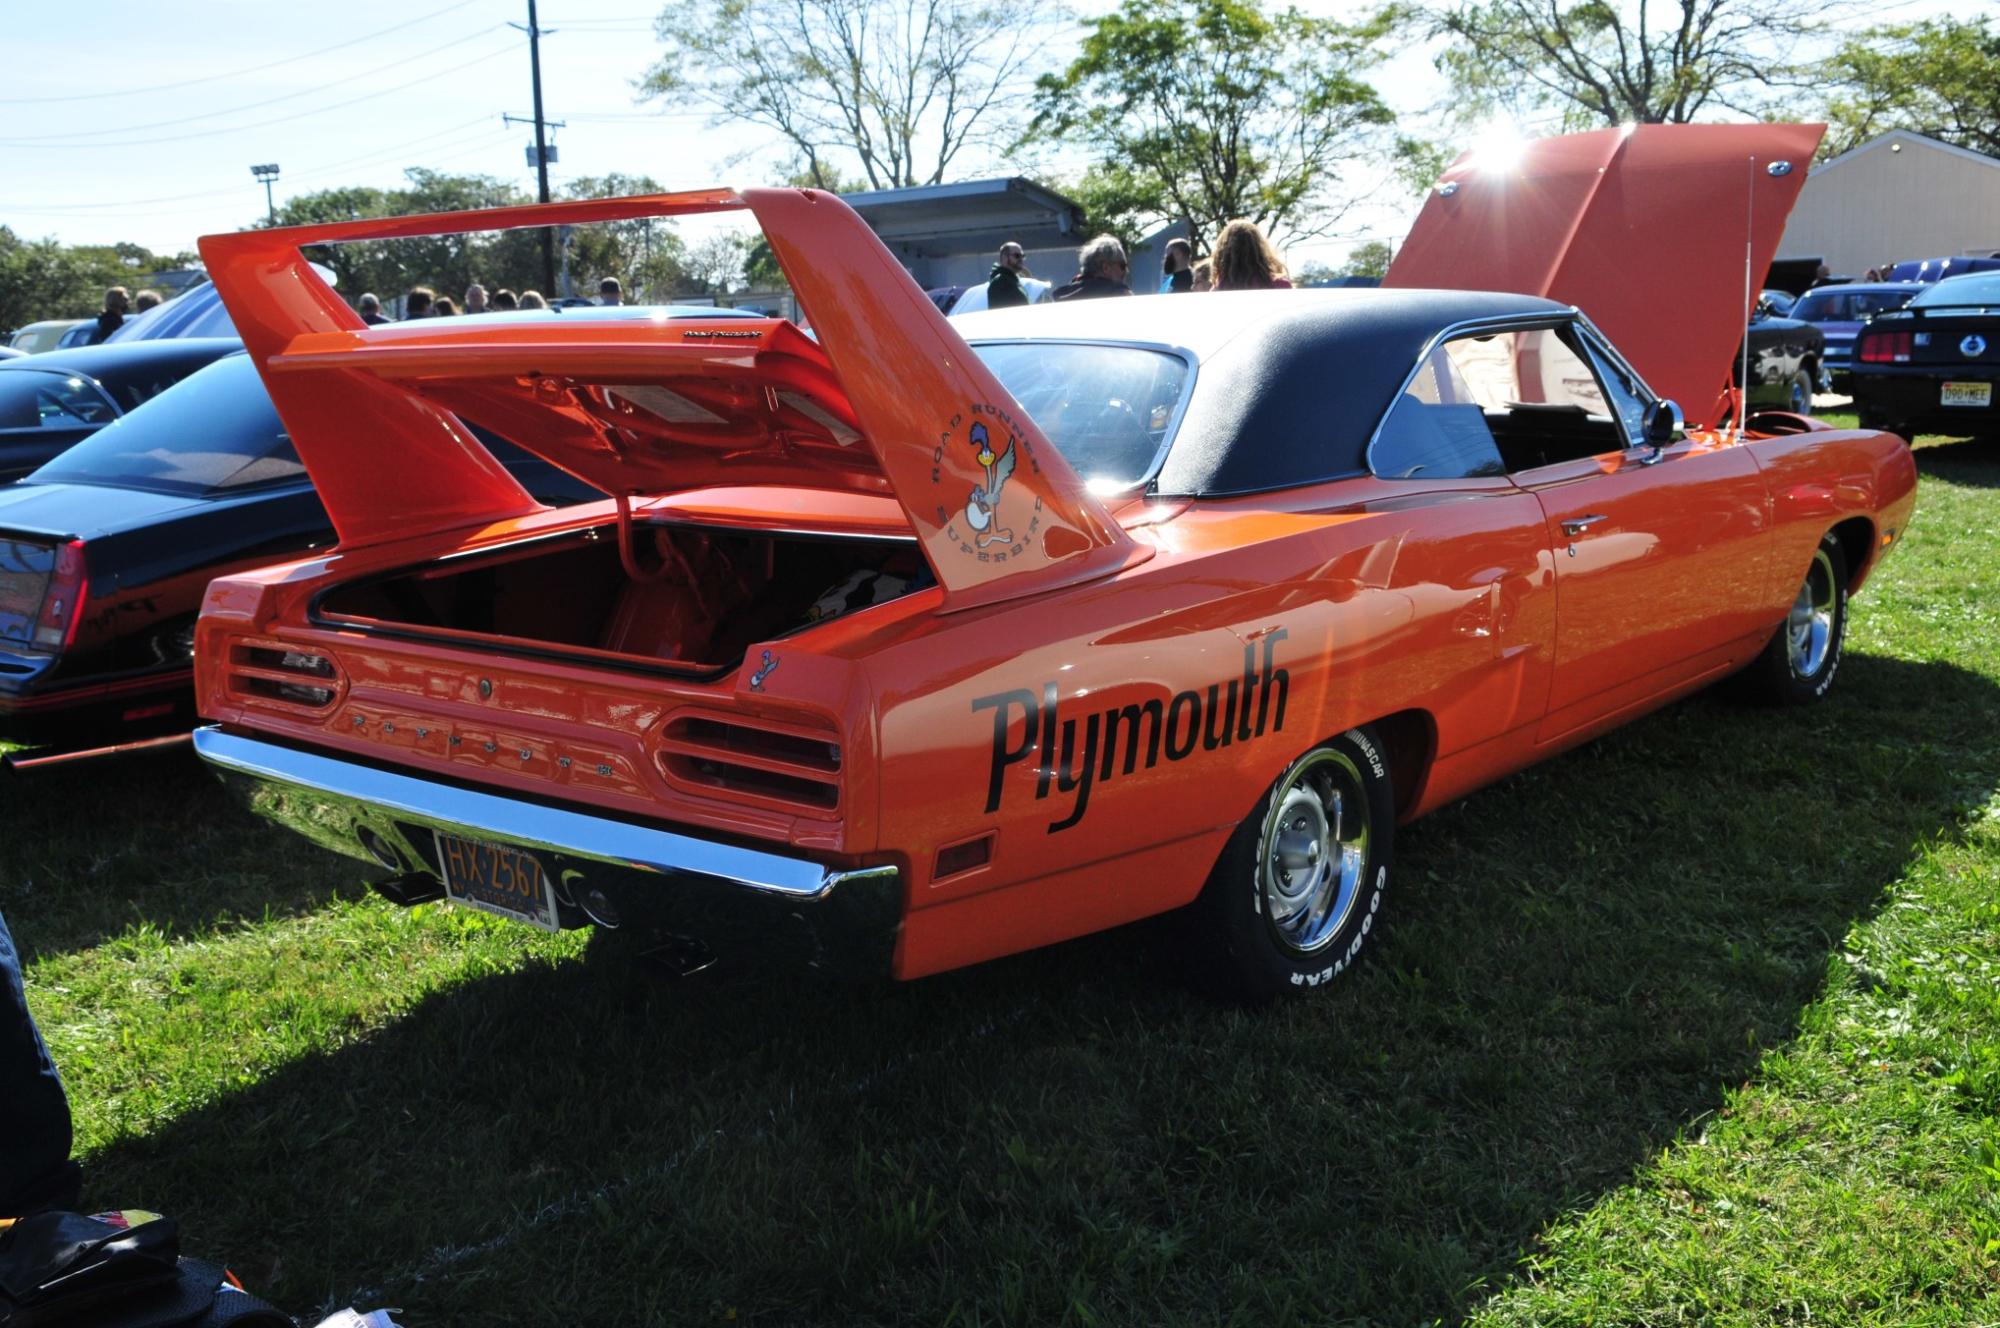 The Plymouth Superbird won plenty of NASCAR races during its short run.